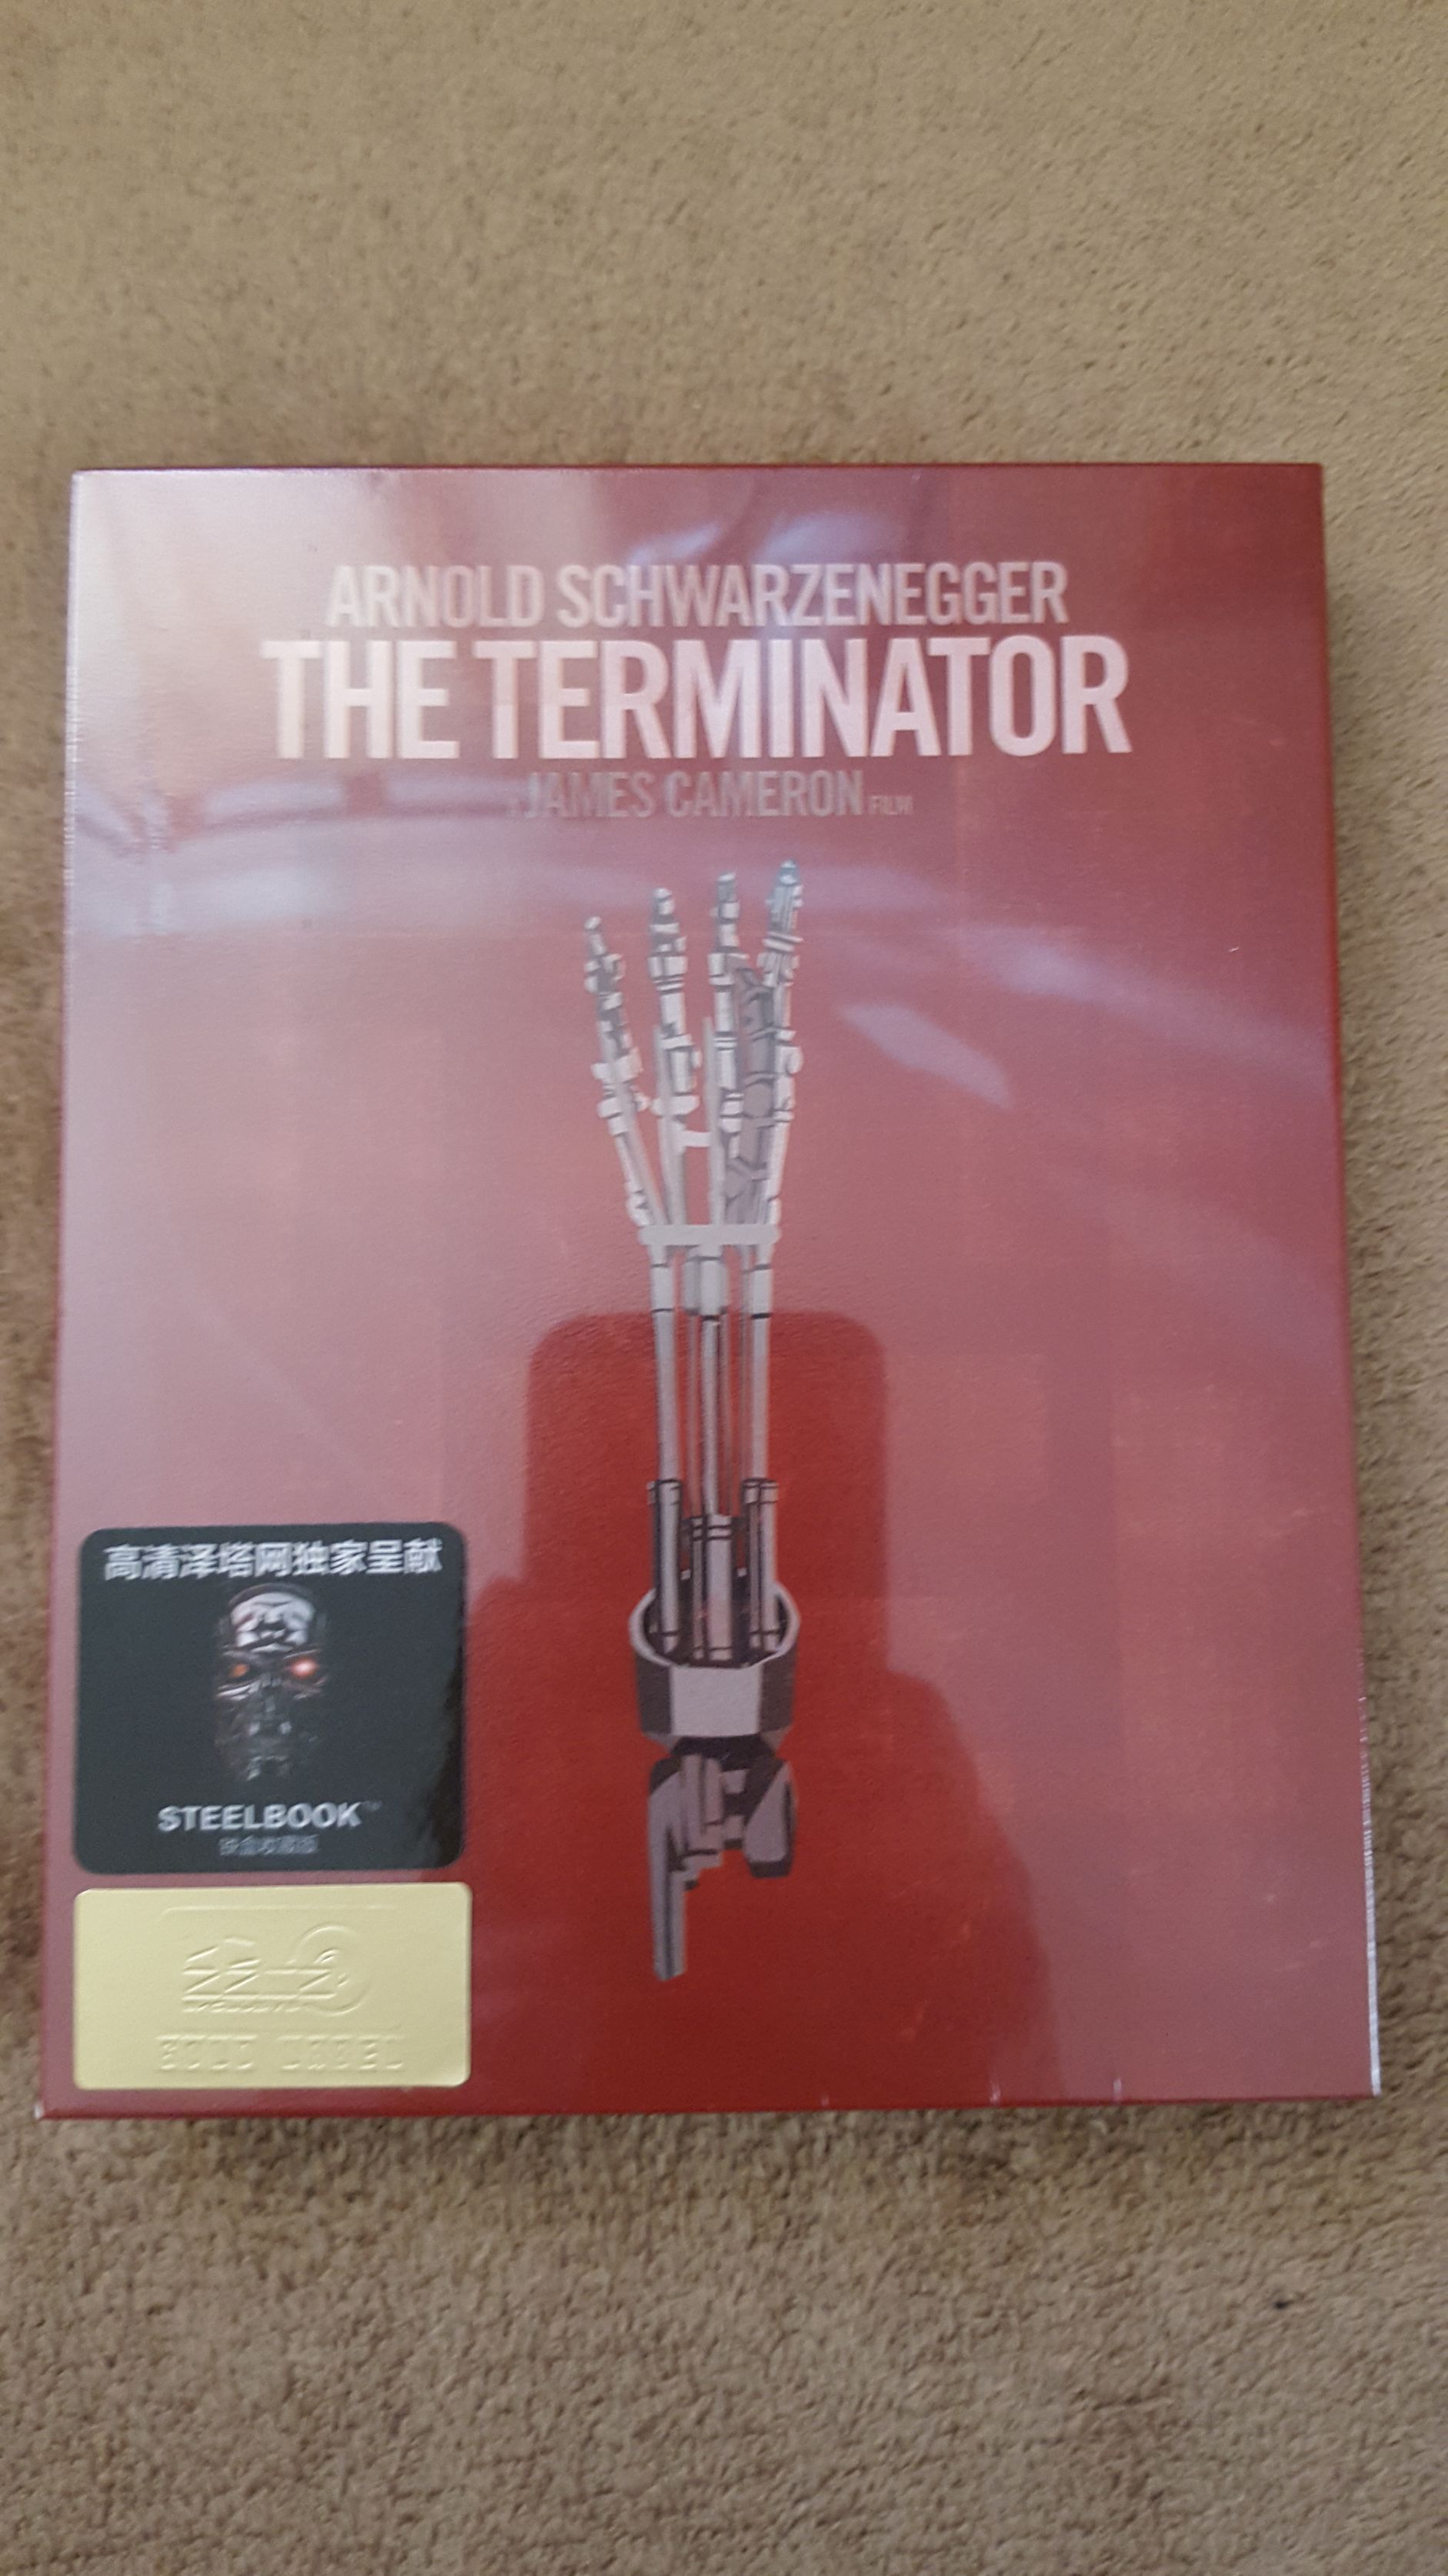 Terminator HDZeta FS.jpg